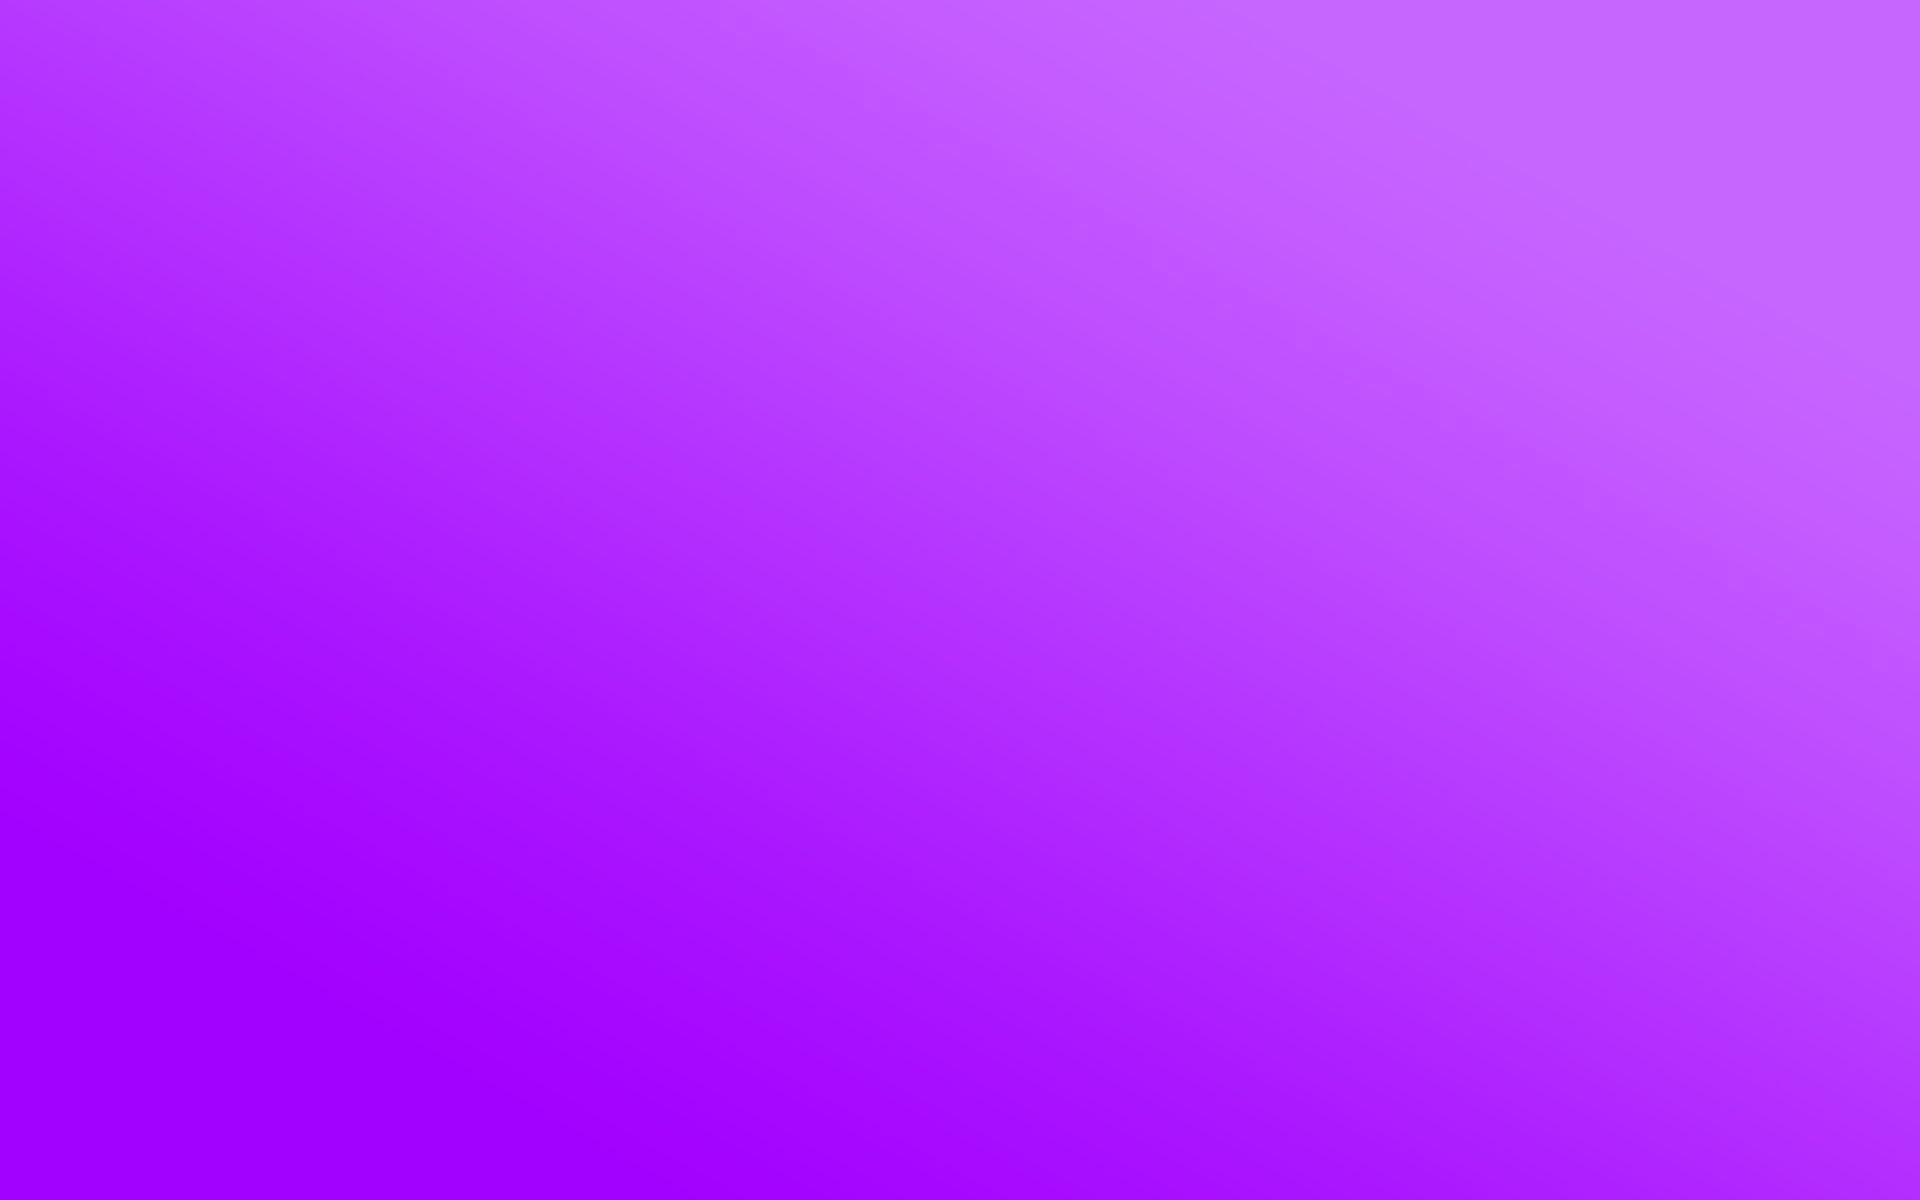 desktop neon purple aesthetic wallpaper